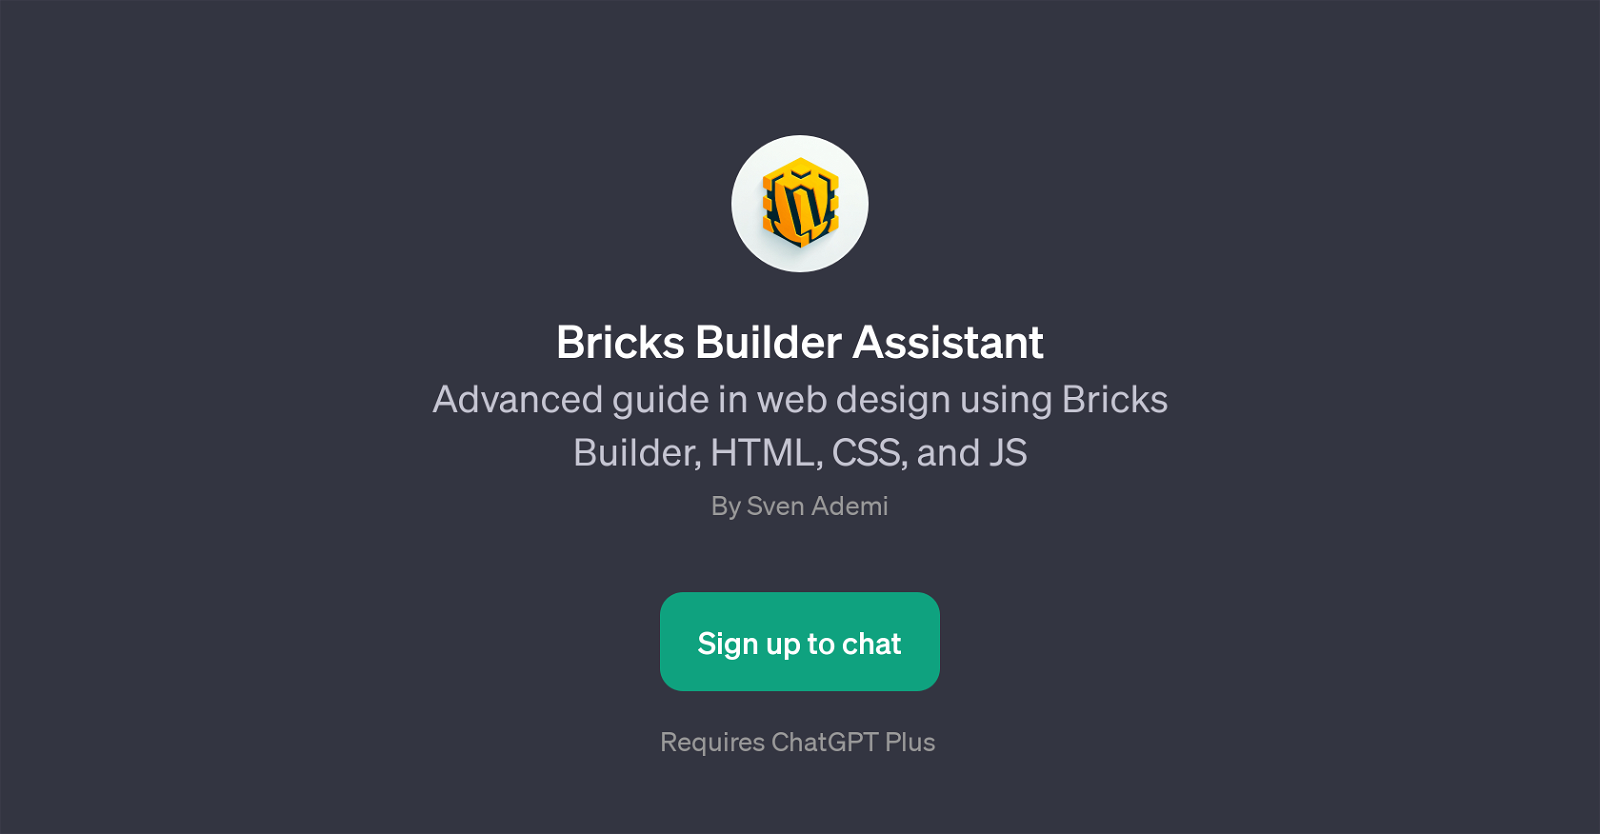 Bricks Builder Assistant website